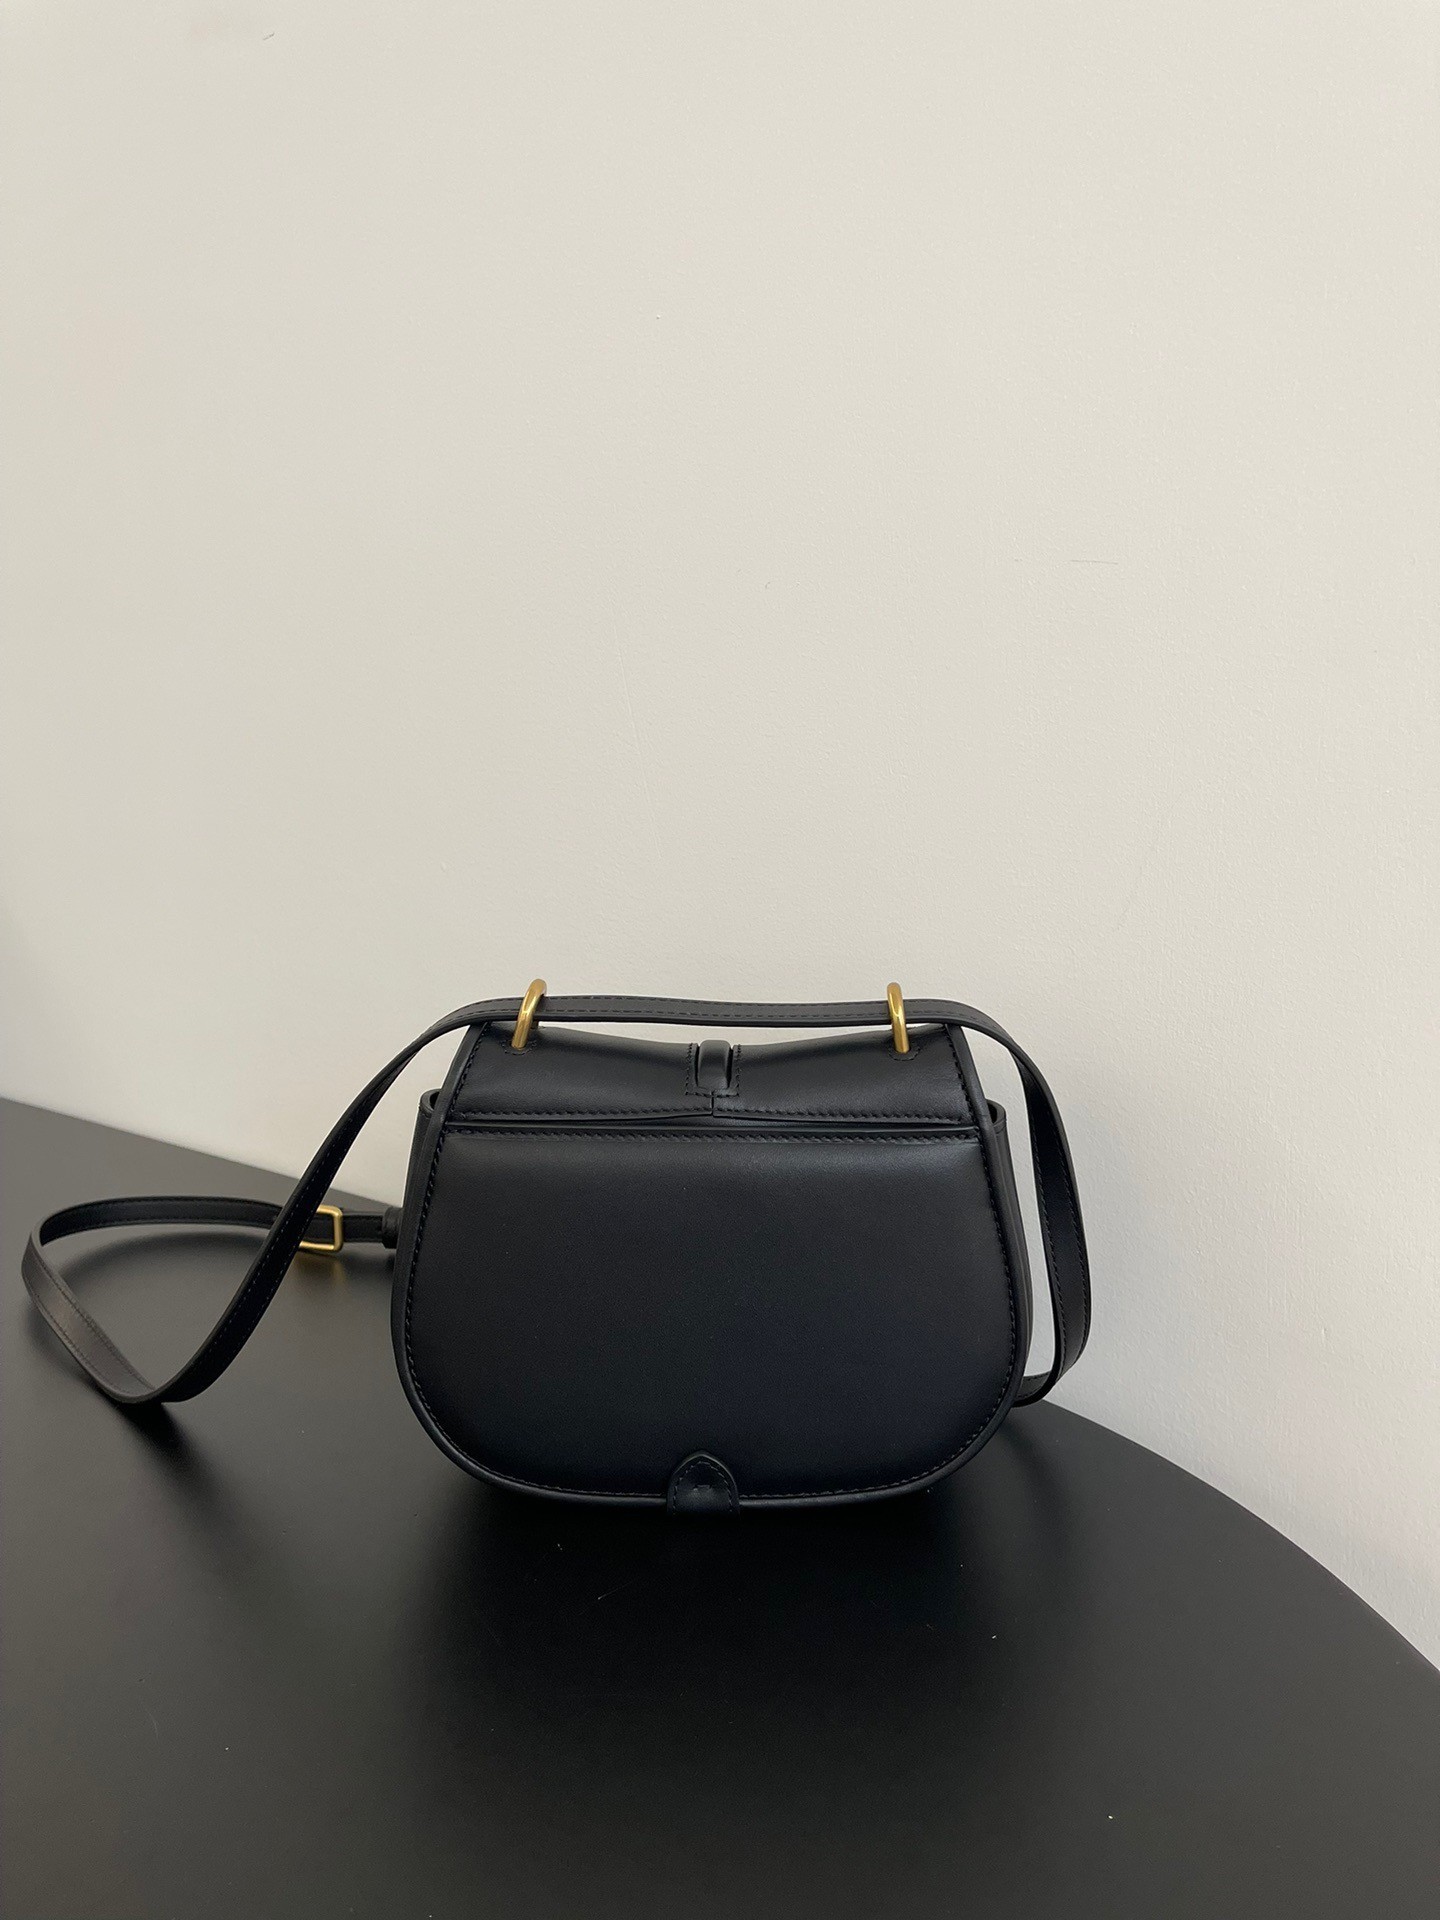 Fendi C’mon Small Bag in Black Calfskin 351